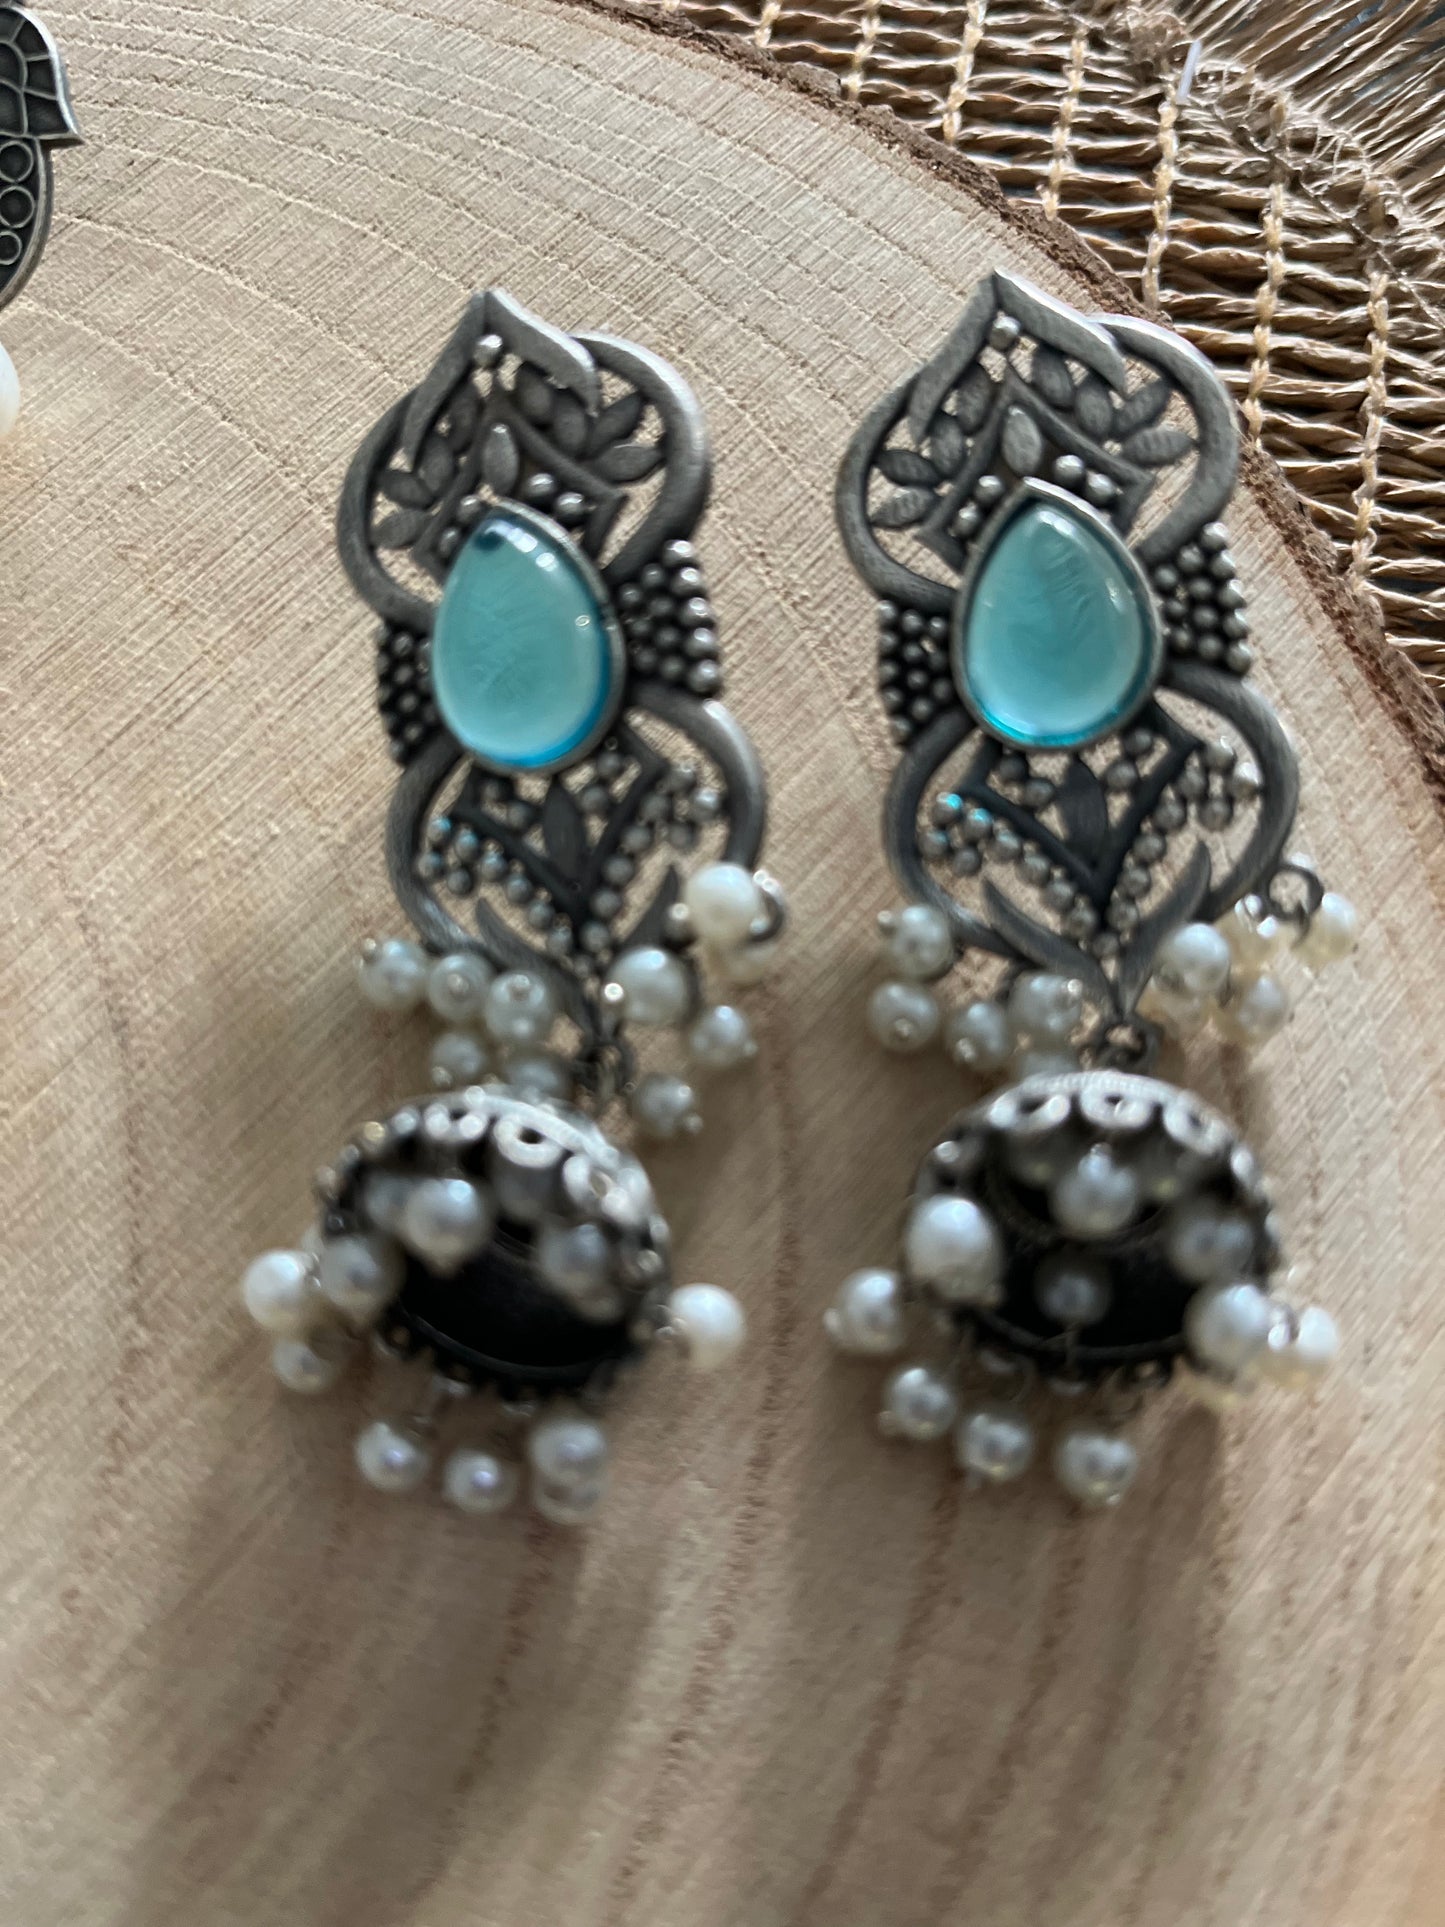 Oxidised antique earrings in jhumki style